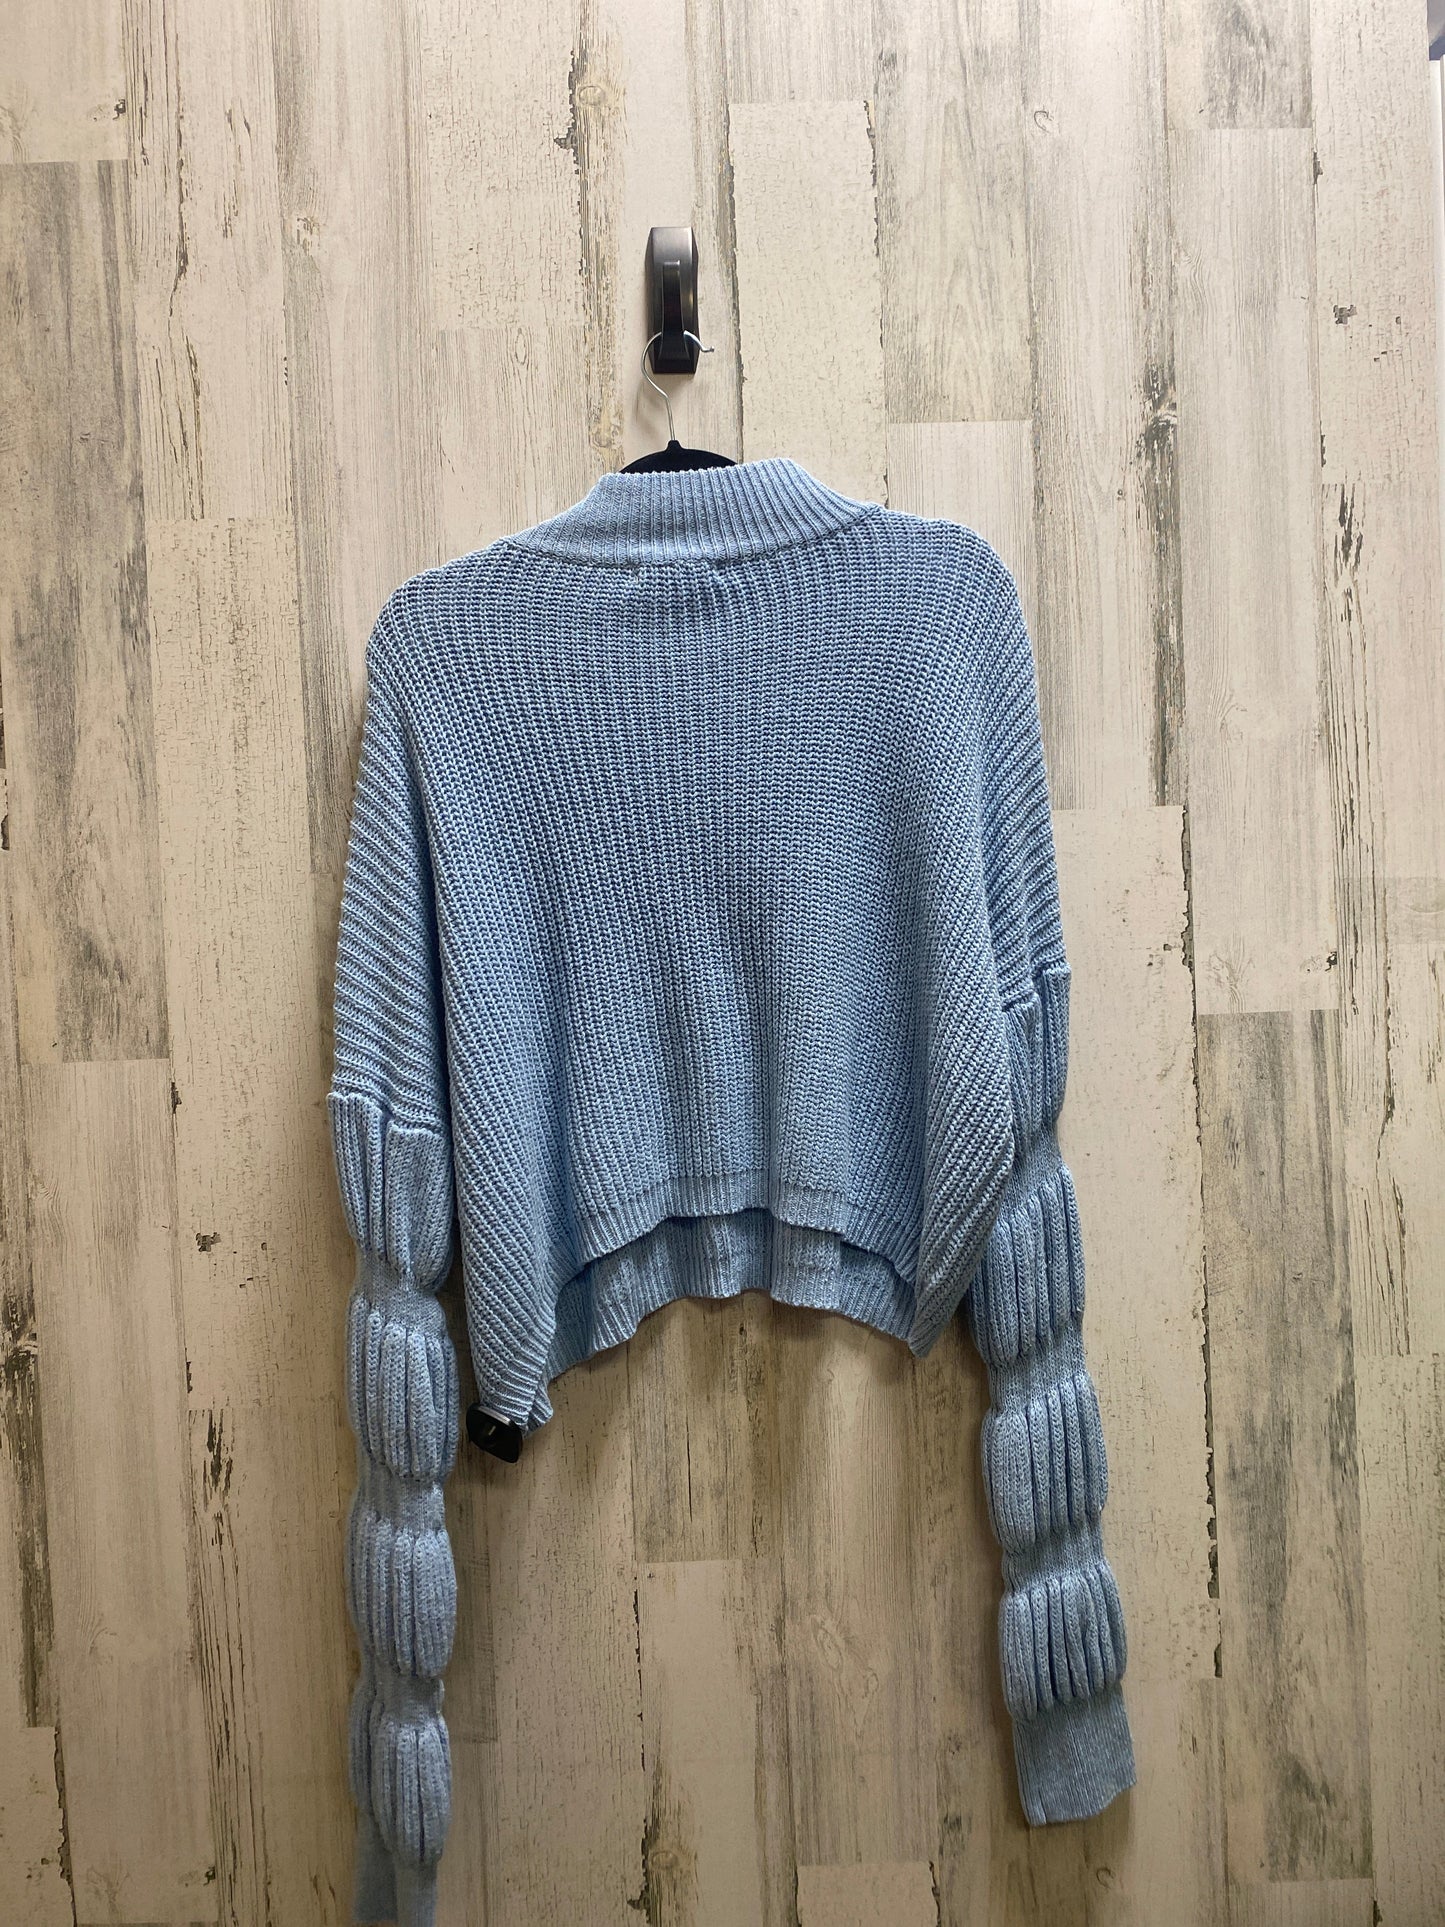 Sweater By Hyfve  Size: L